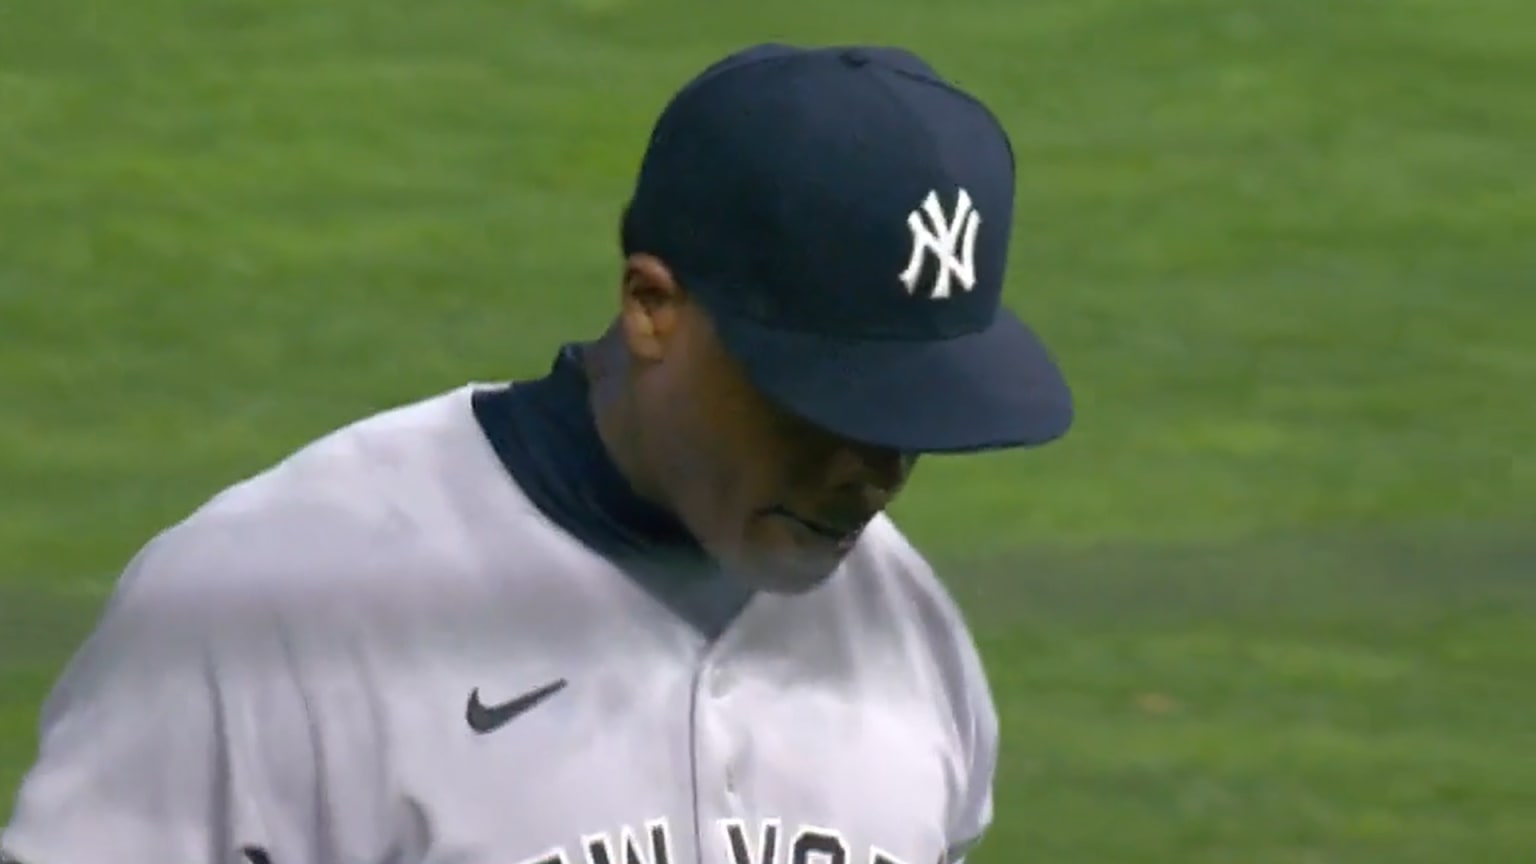 Yankees yankees uniform cannot put Aroldis Chapman on their